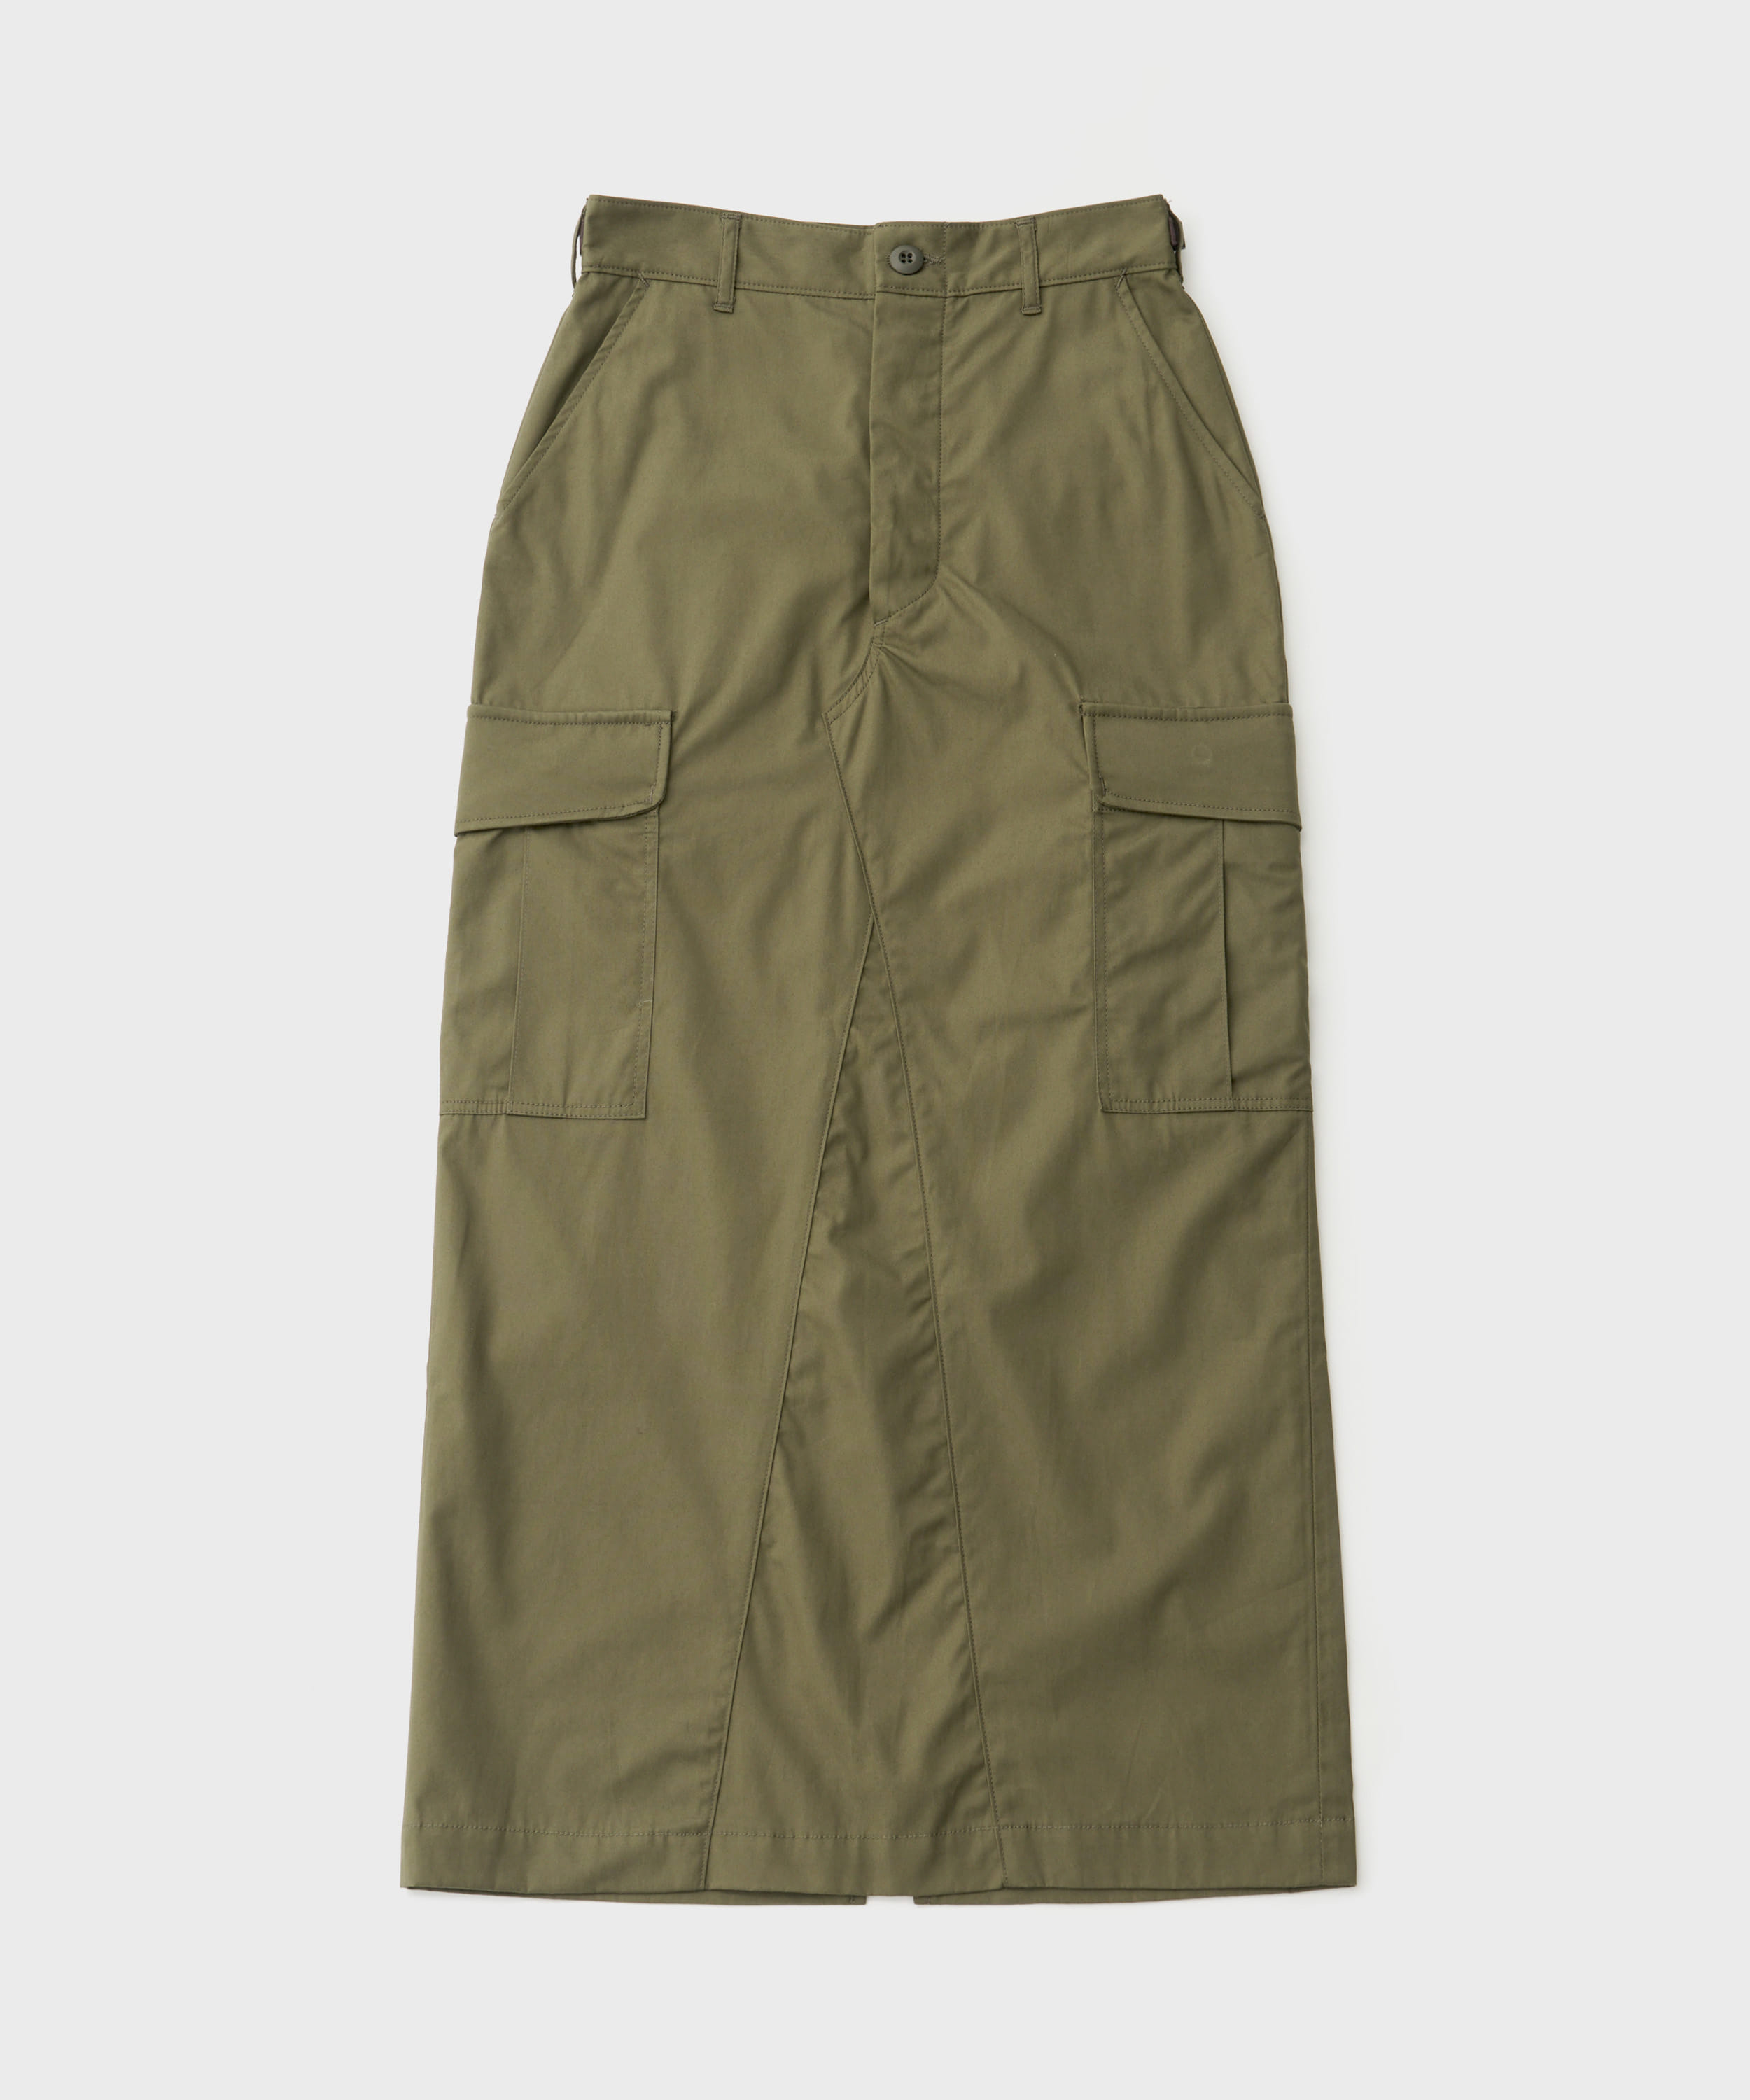 Jungle Fatigue Skirt (Olive)